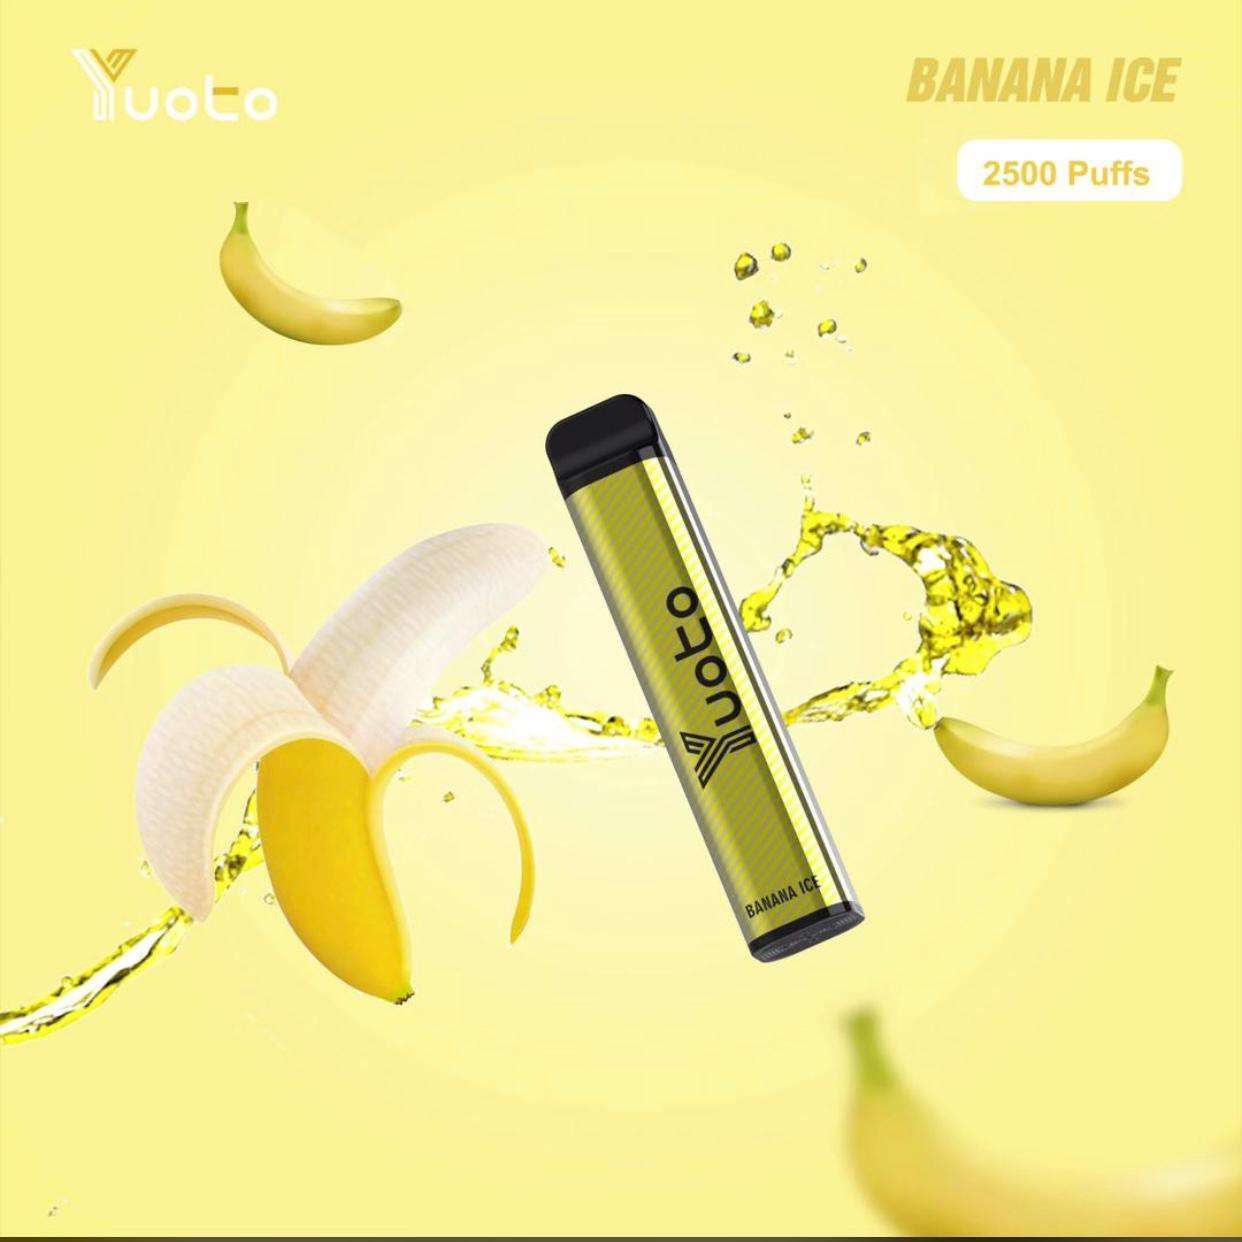 Yuoto xxl disposable banana ice 2500 puffs